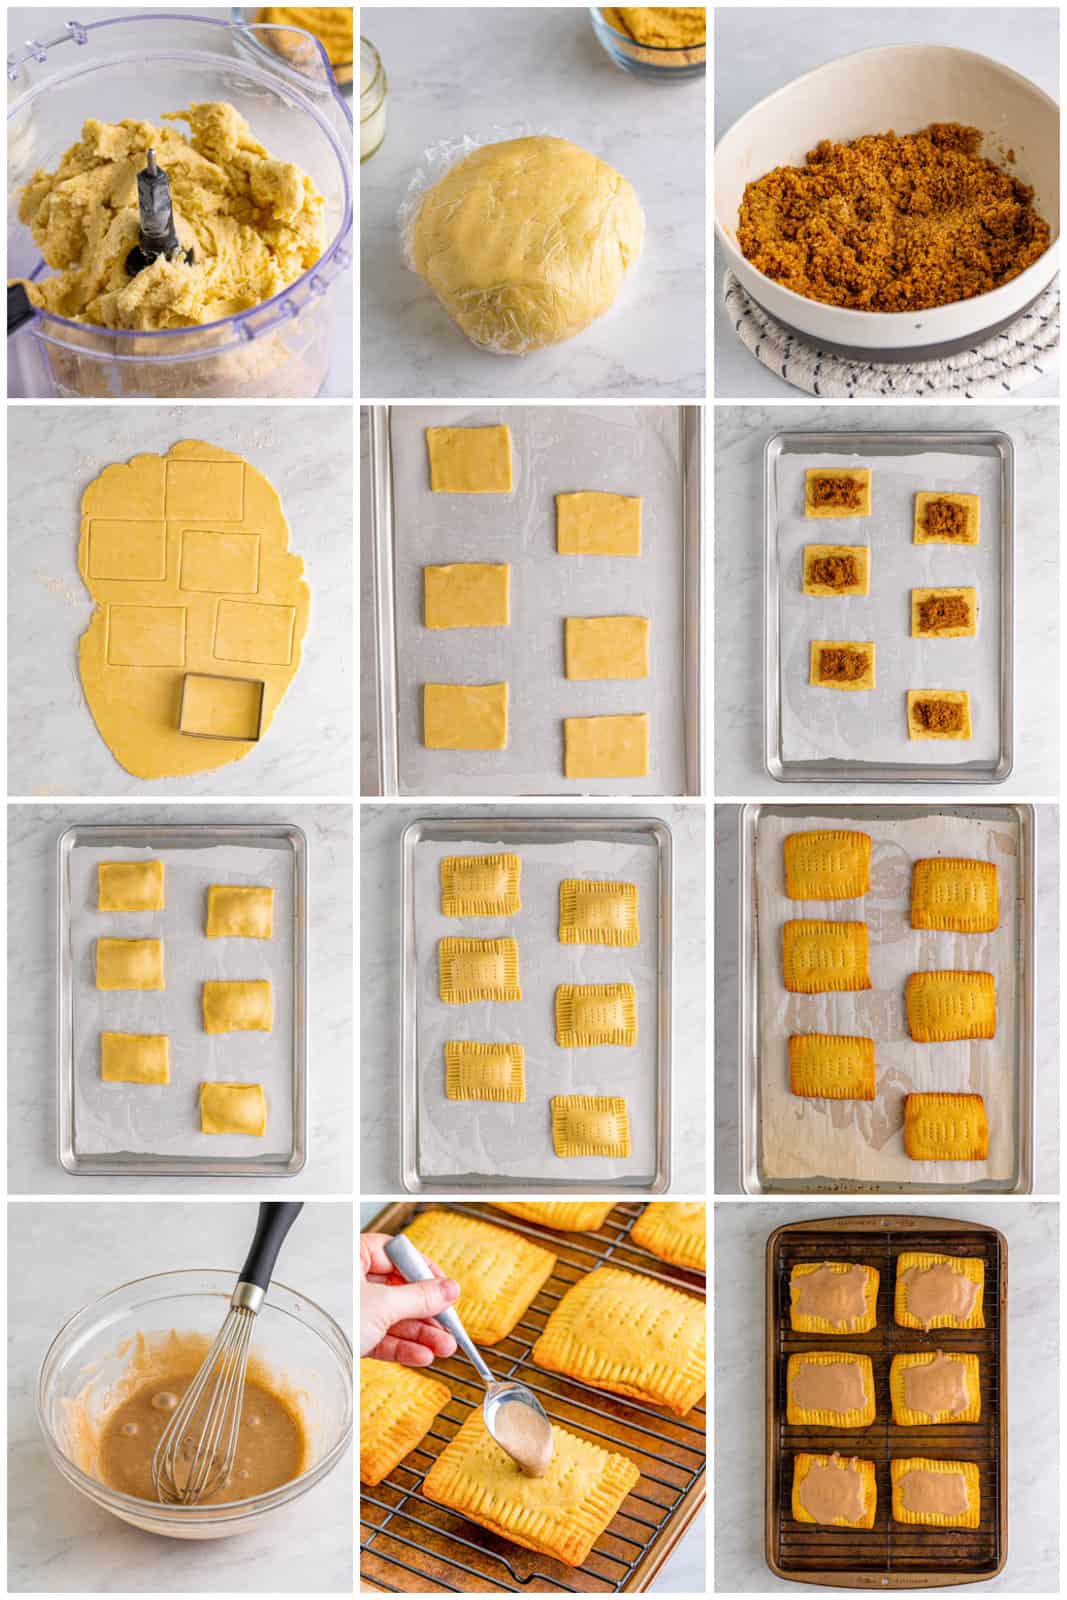 Step by step photos on how to make Brown Sugar Cinnamon Pop-Tarts.